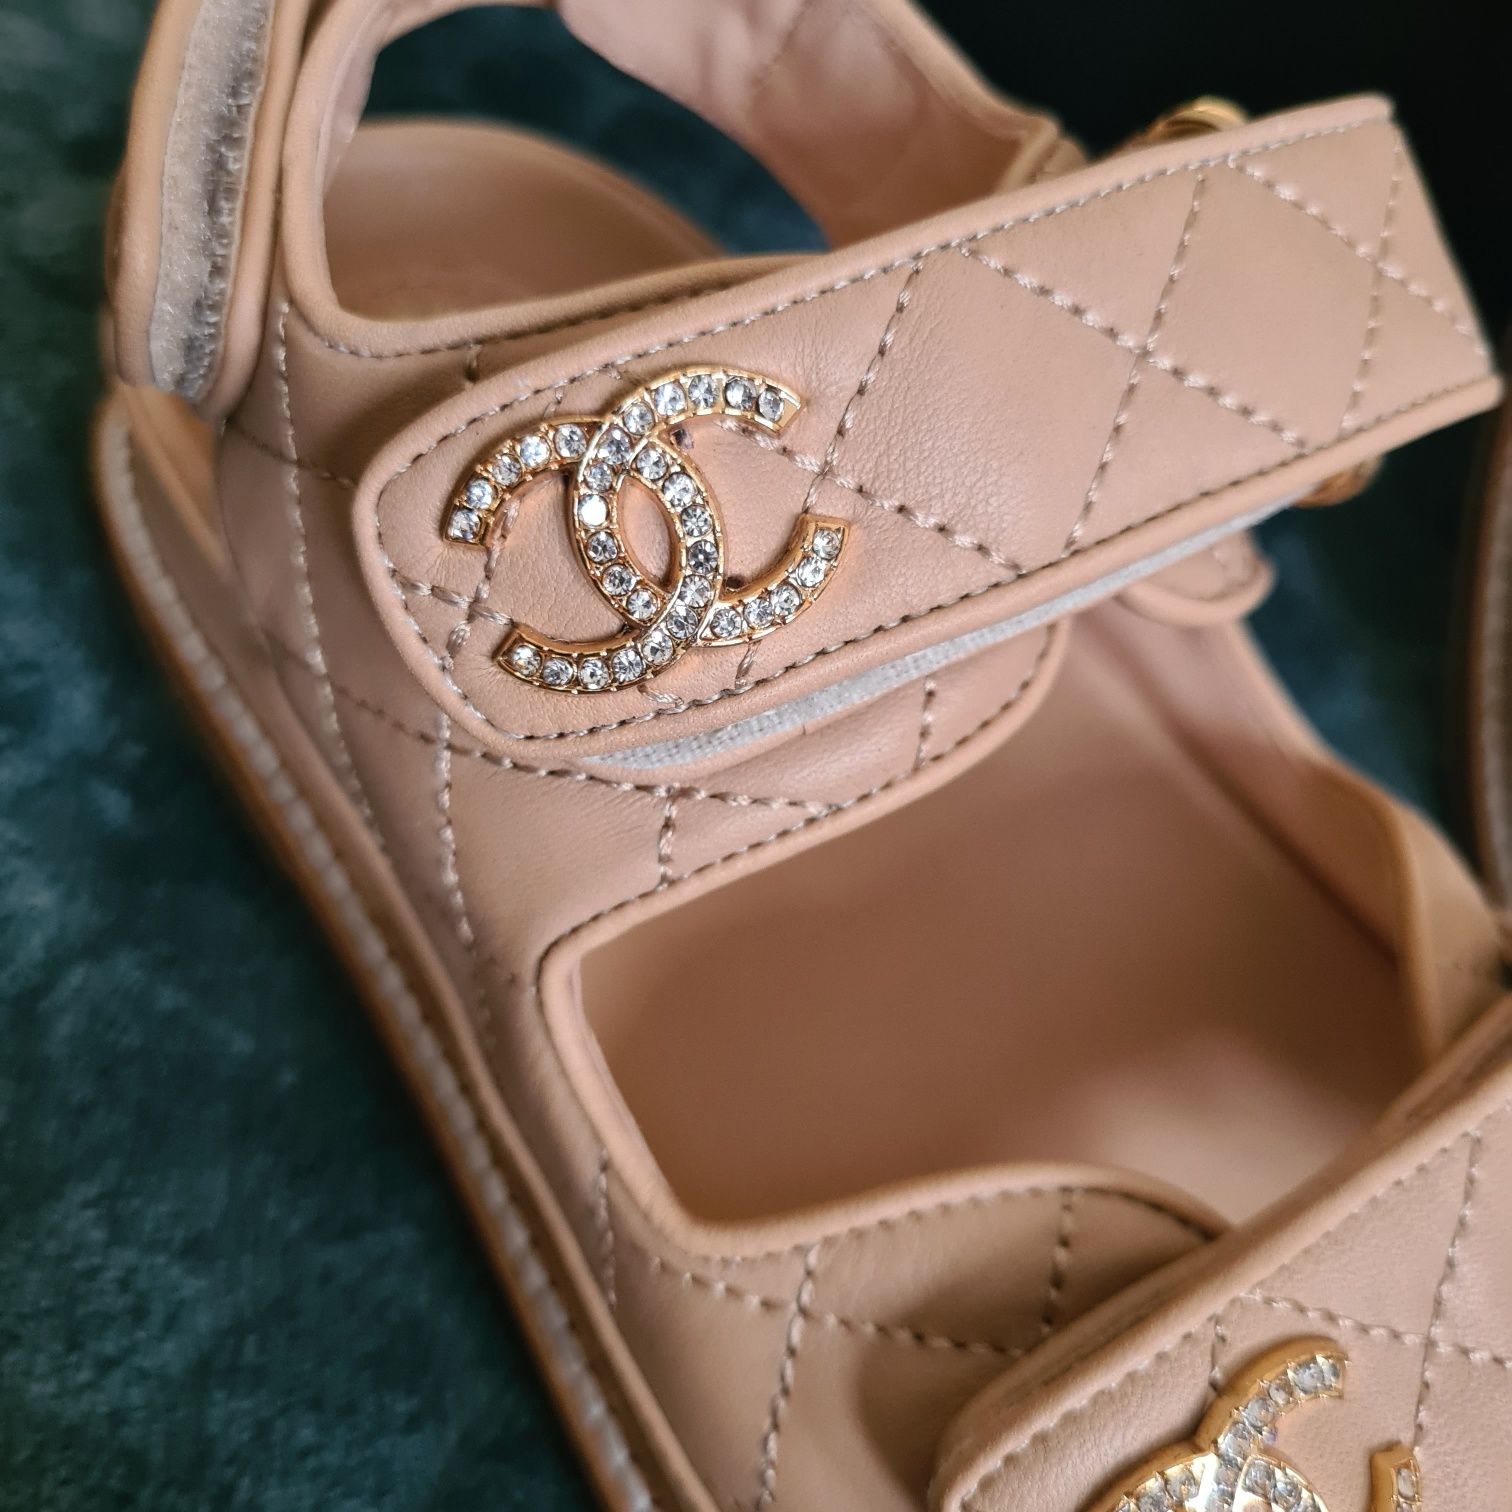 Chanel Dad leather sandals -size 36, piele naturala, cutie